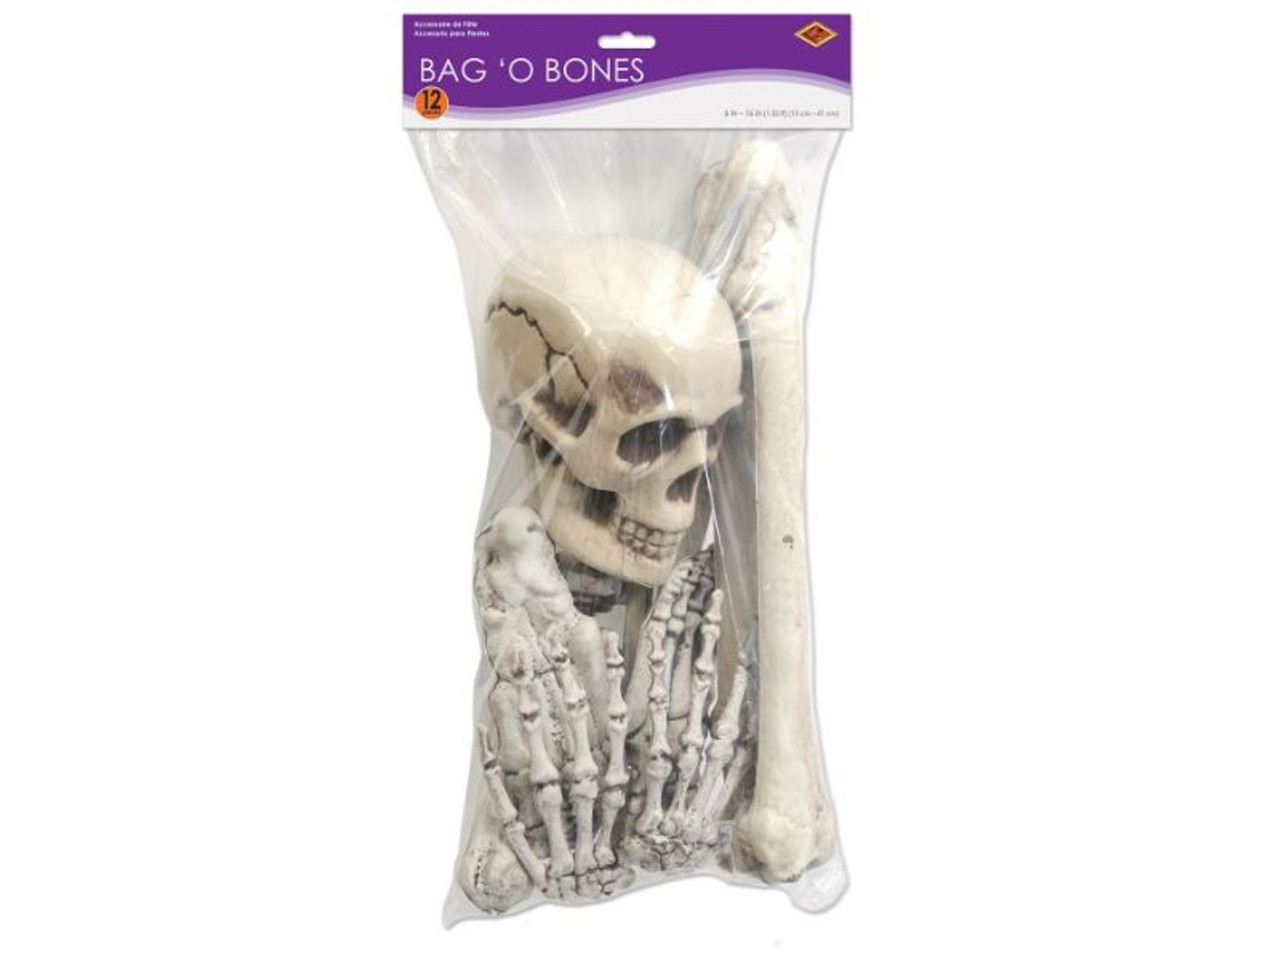 Bag 'O Bones